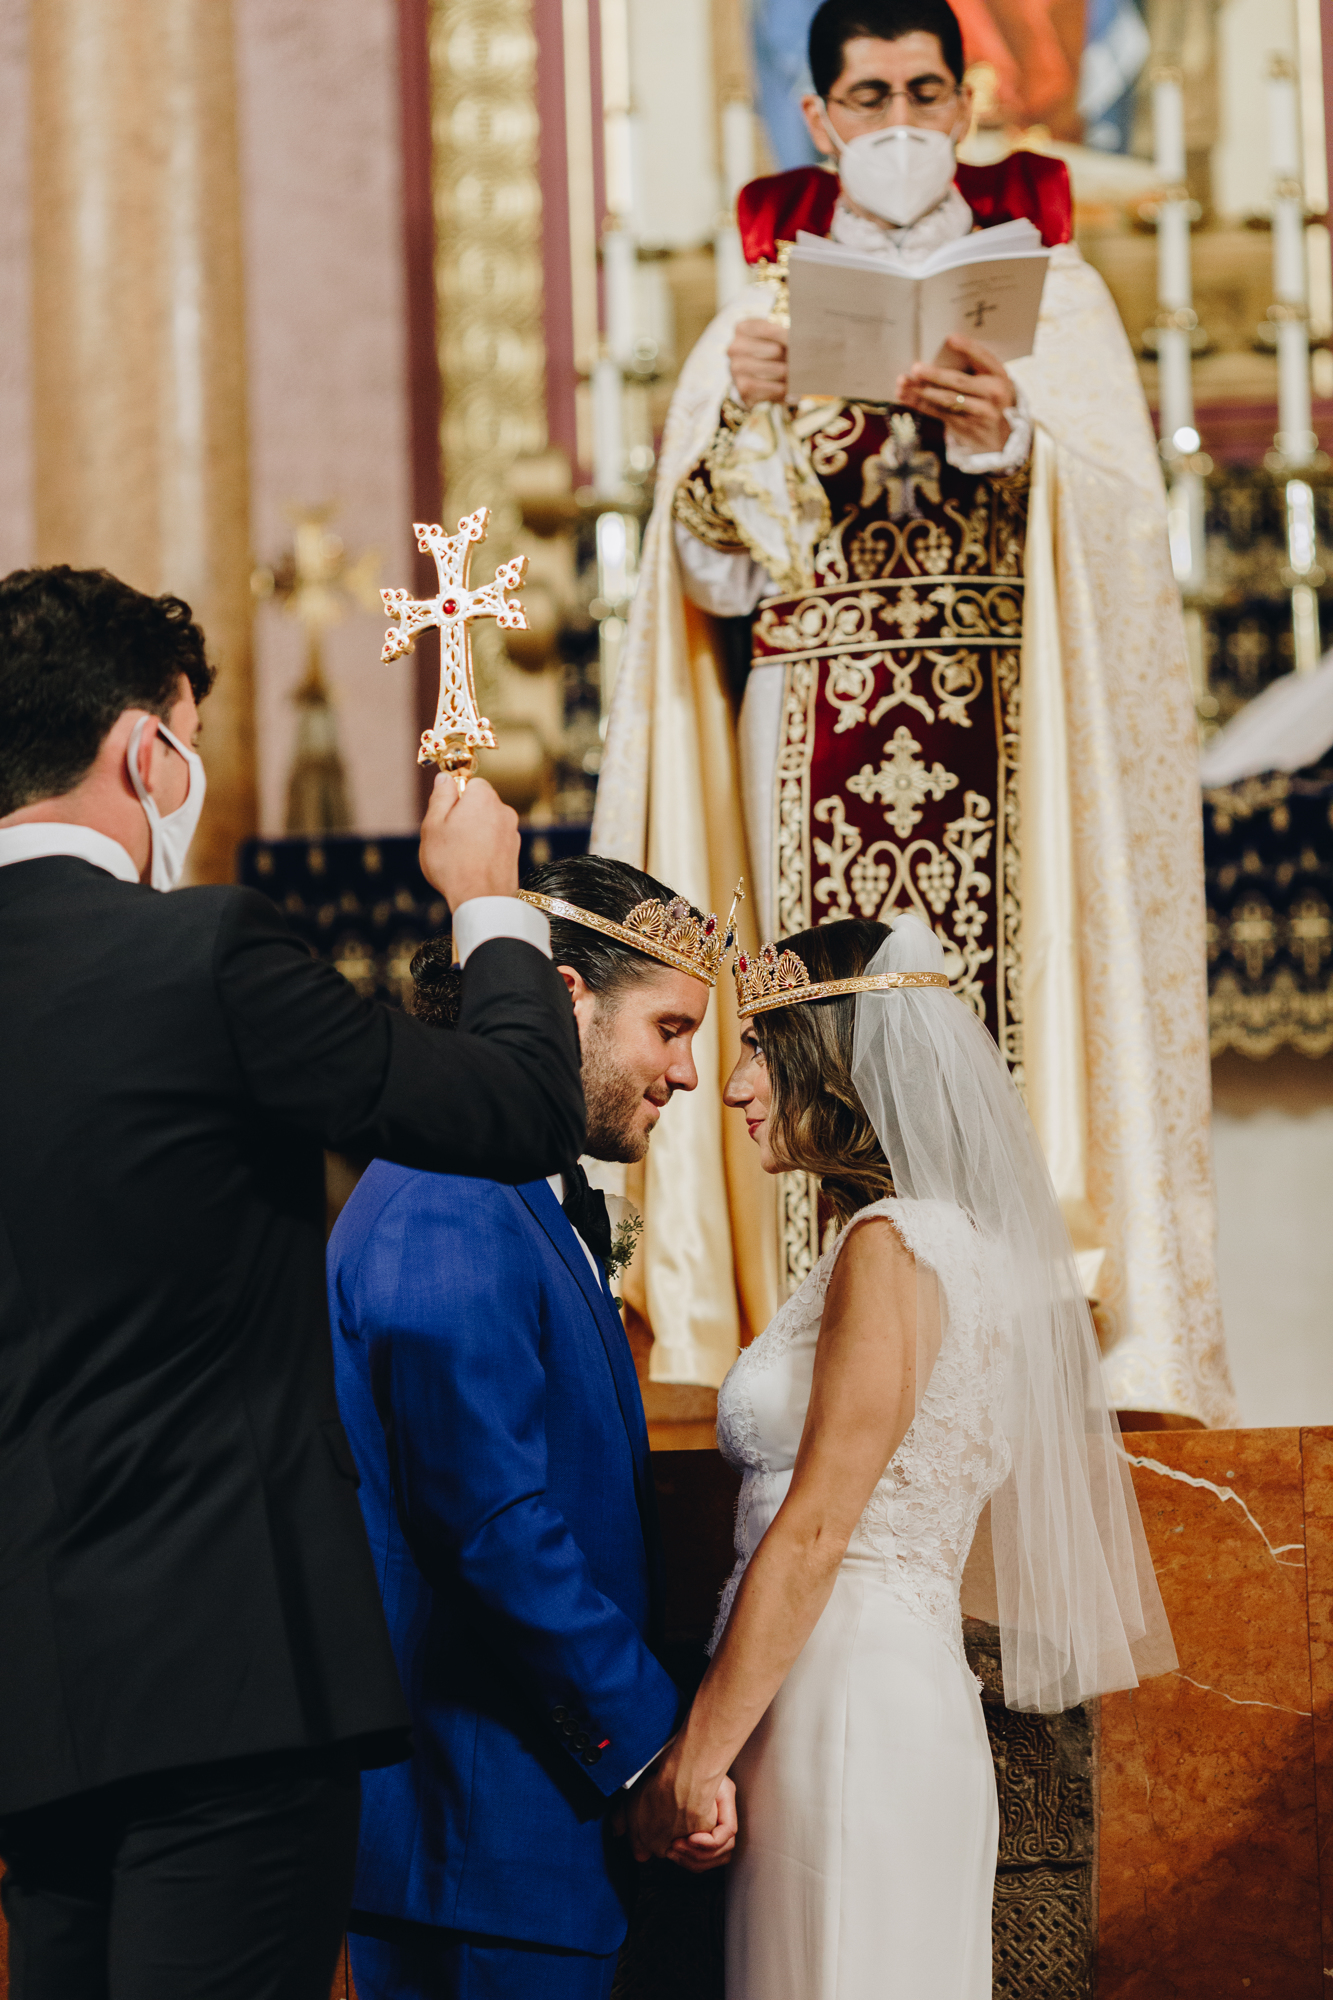 Crowning wedding ceremony at Armenian Church in New York